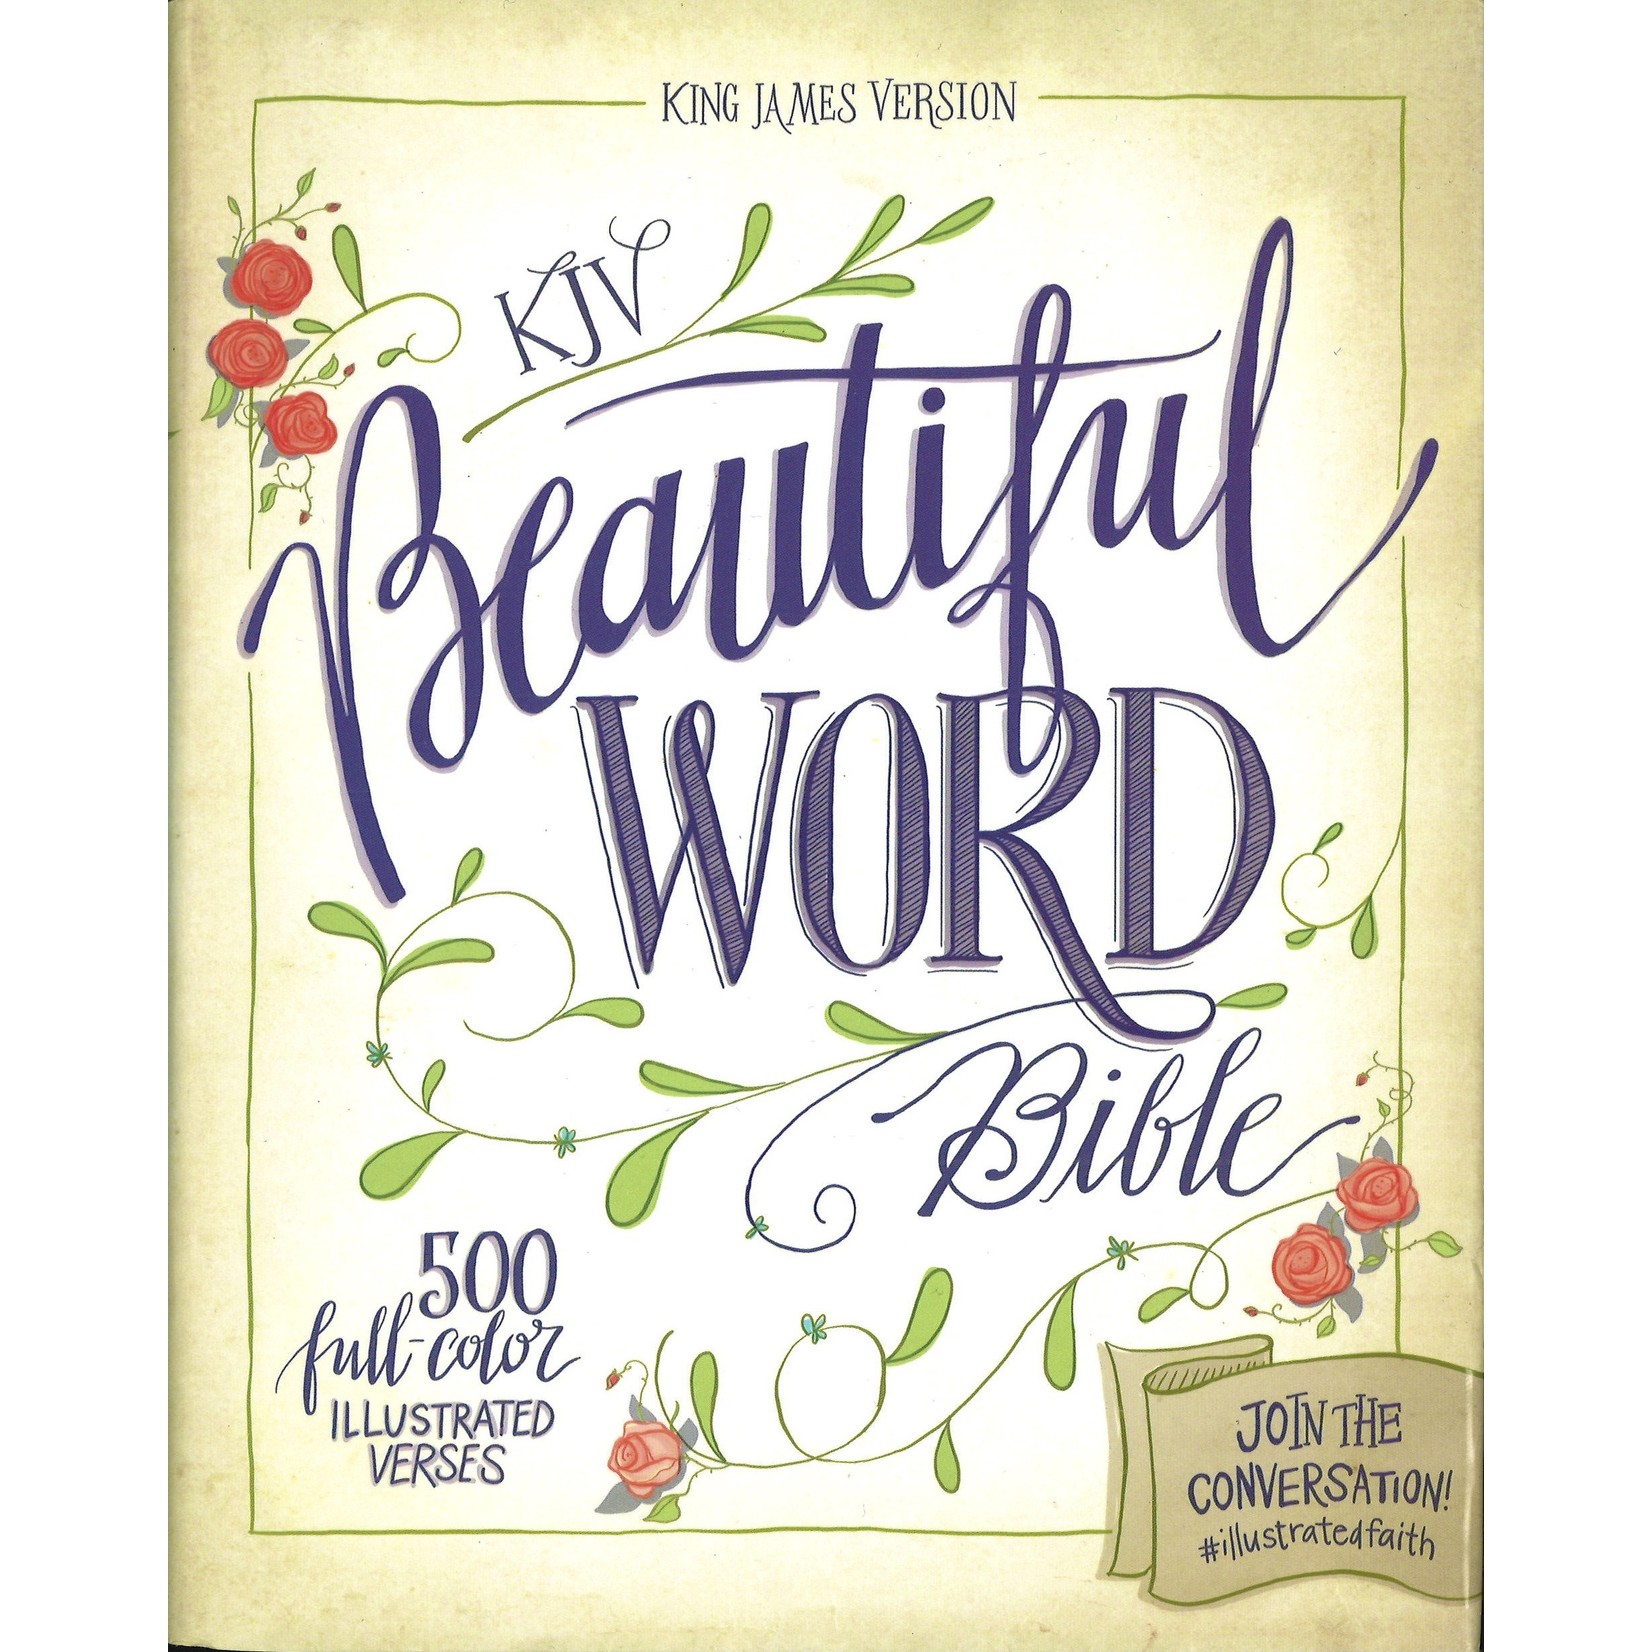 KJV BEAUTIFUL WORD BIBLE - HARDCOVER